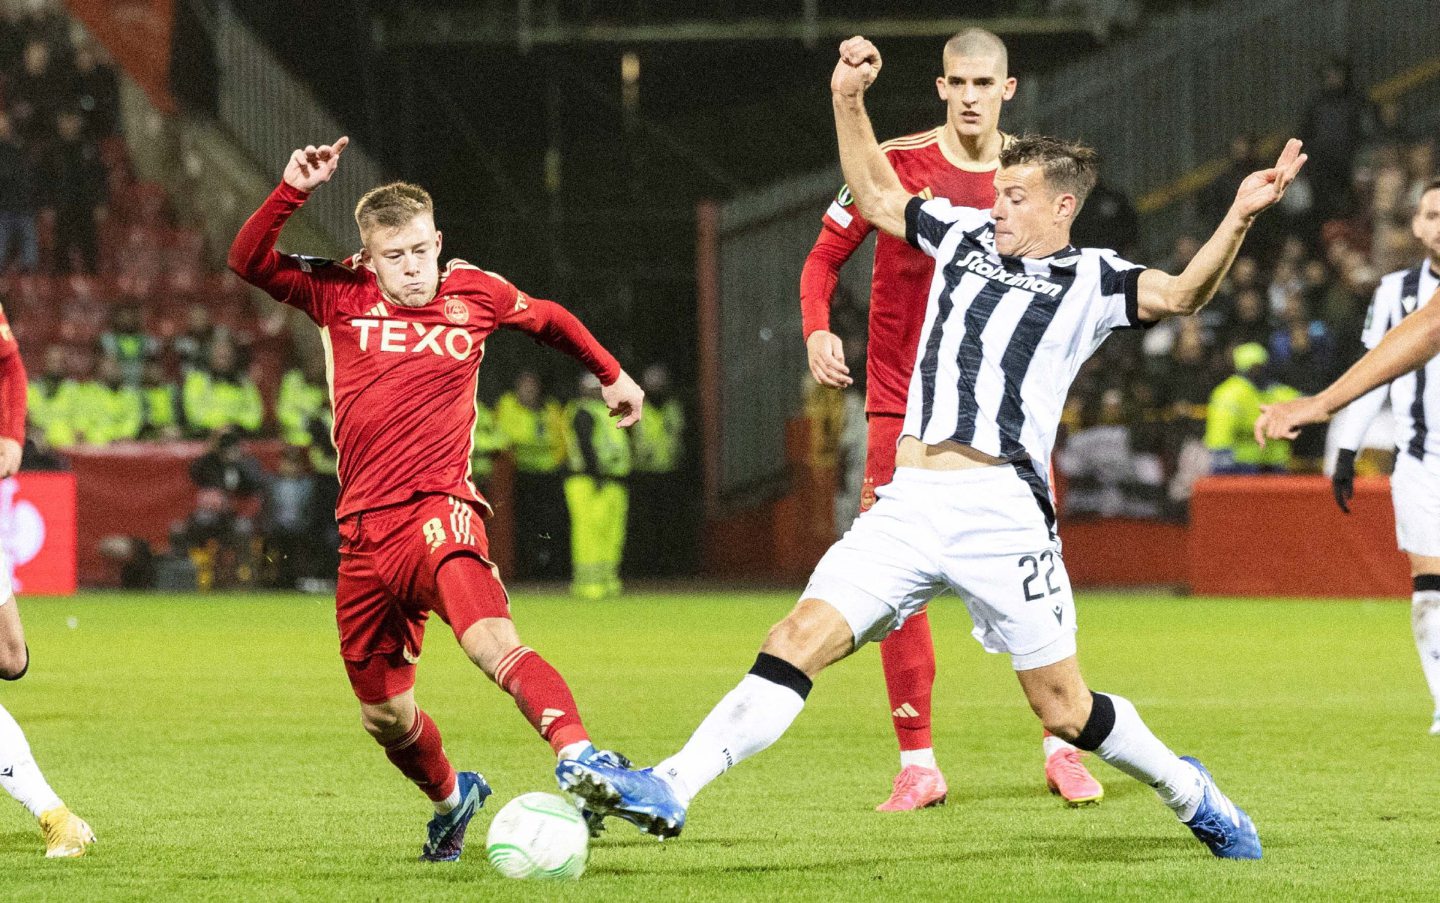 Aberdeen's Connor Barron and PAOK's Stefan Schwab in action.